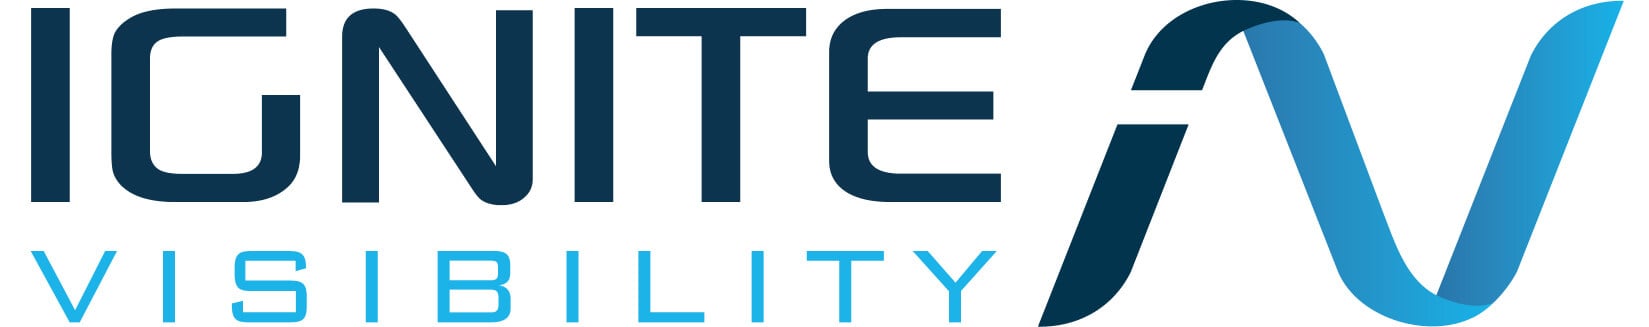 Top Dental SEO Agency Logo: Ignite Visibility